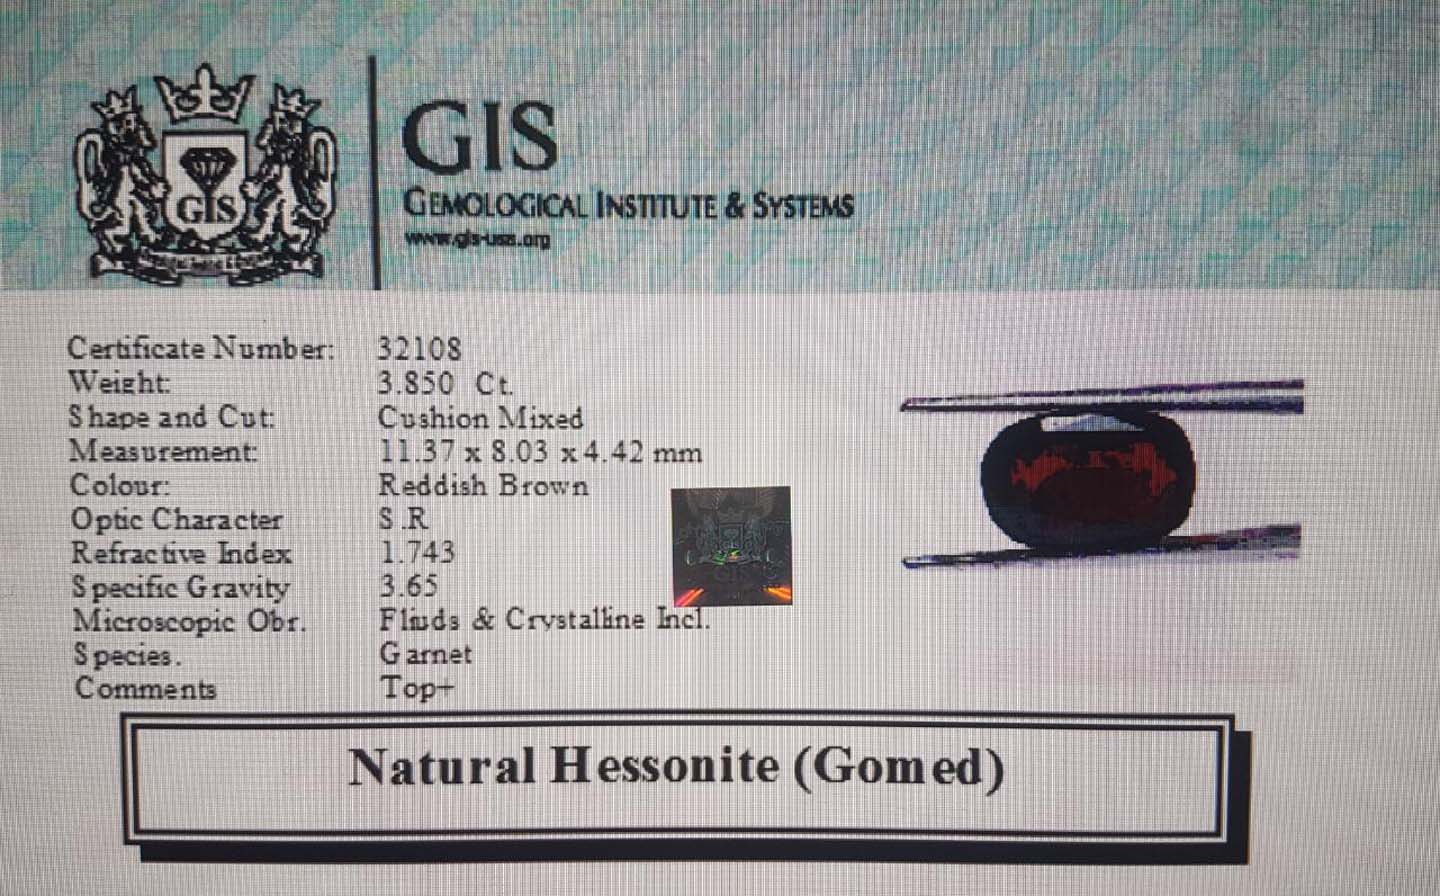 Hessonite (Gomed) 3.85 Ct.